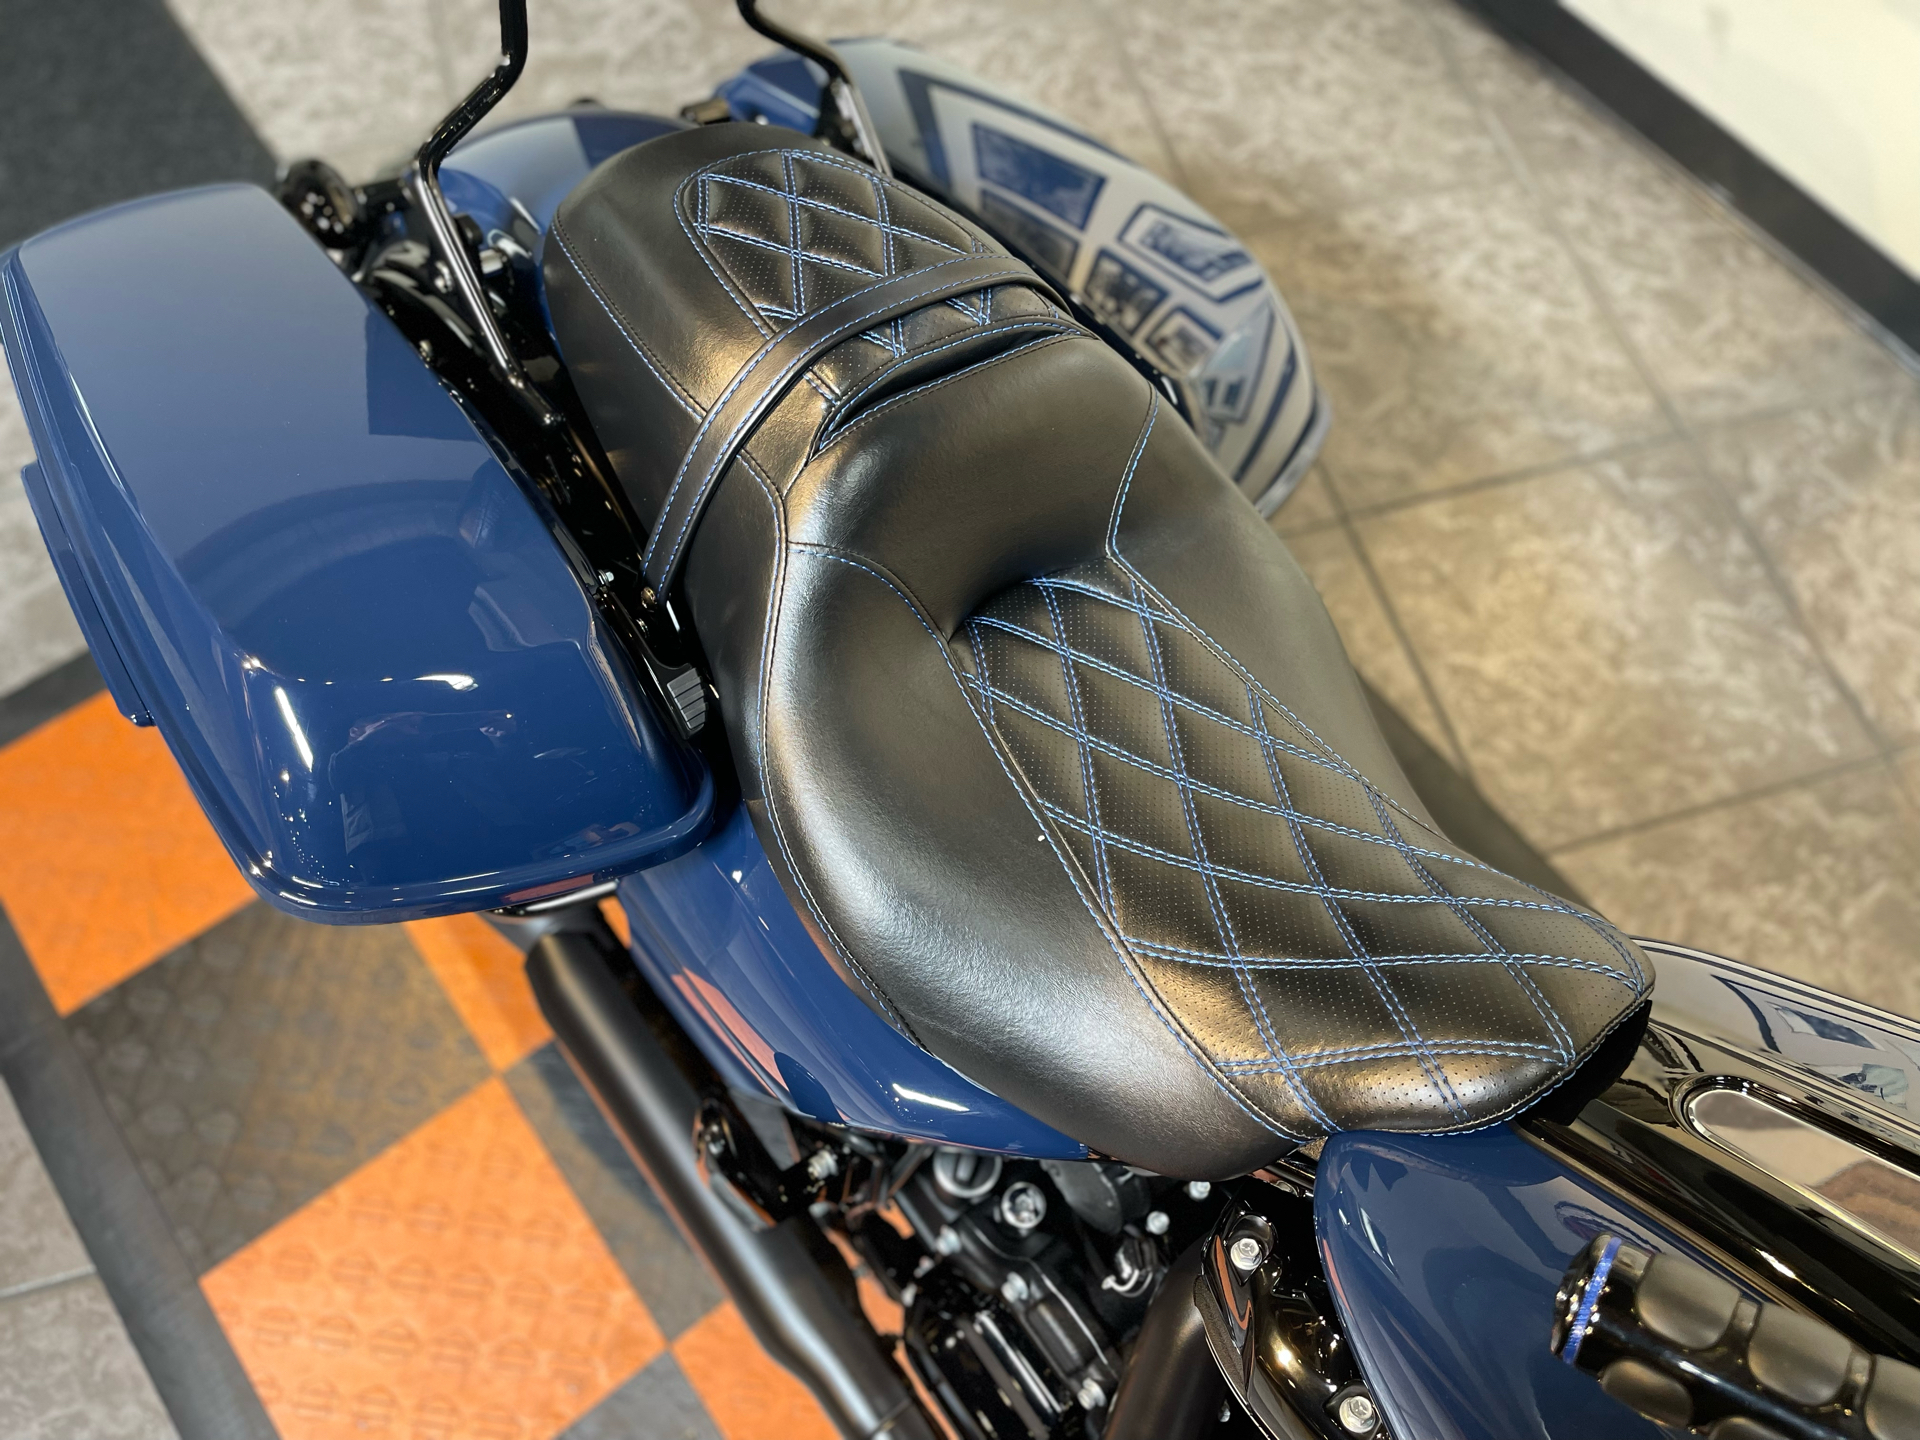 2019 Harley-Davidson Road Glide® Special in Baldwin Park, California - Photo 15